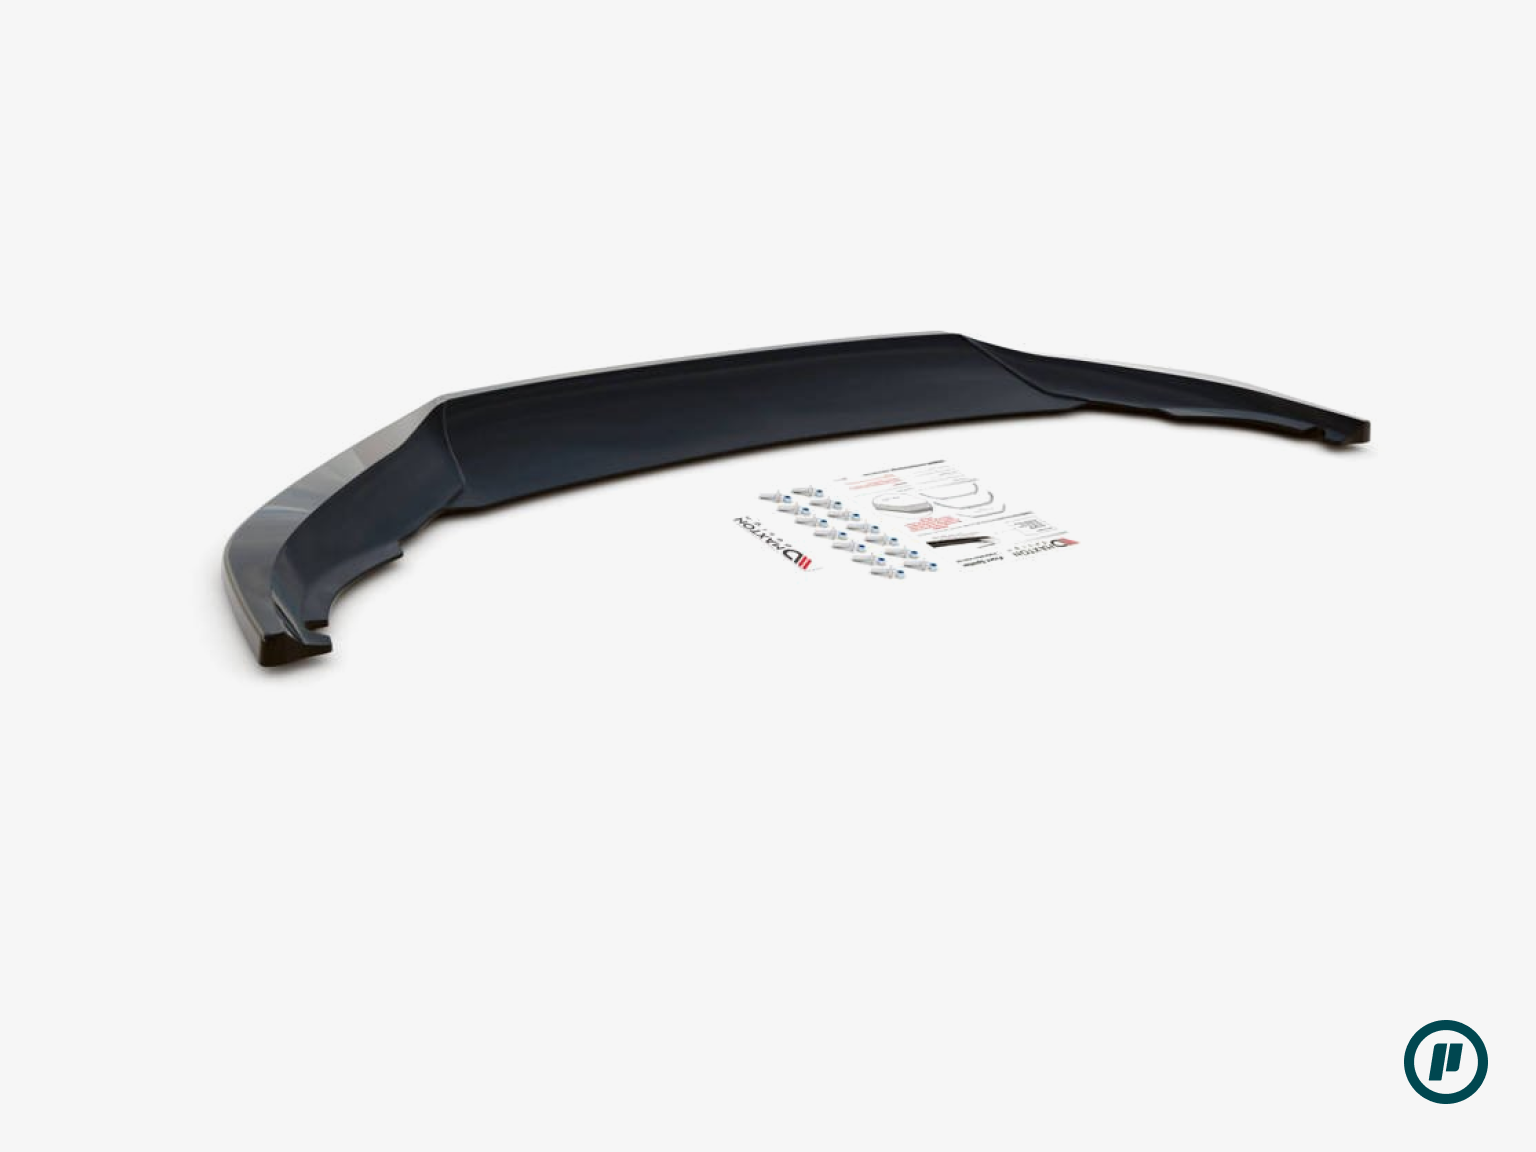 Maxton Design - Front Splitter v3 for Cupra Formentor (KM 2020+)